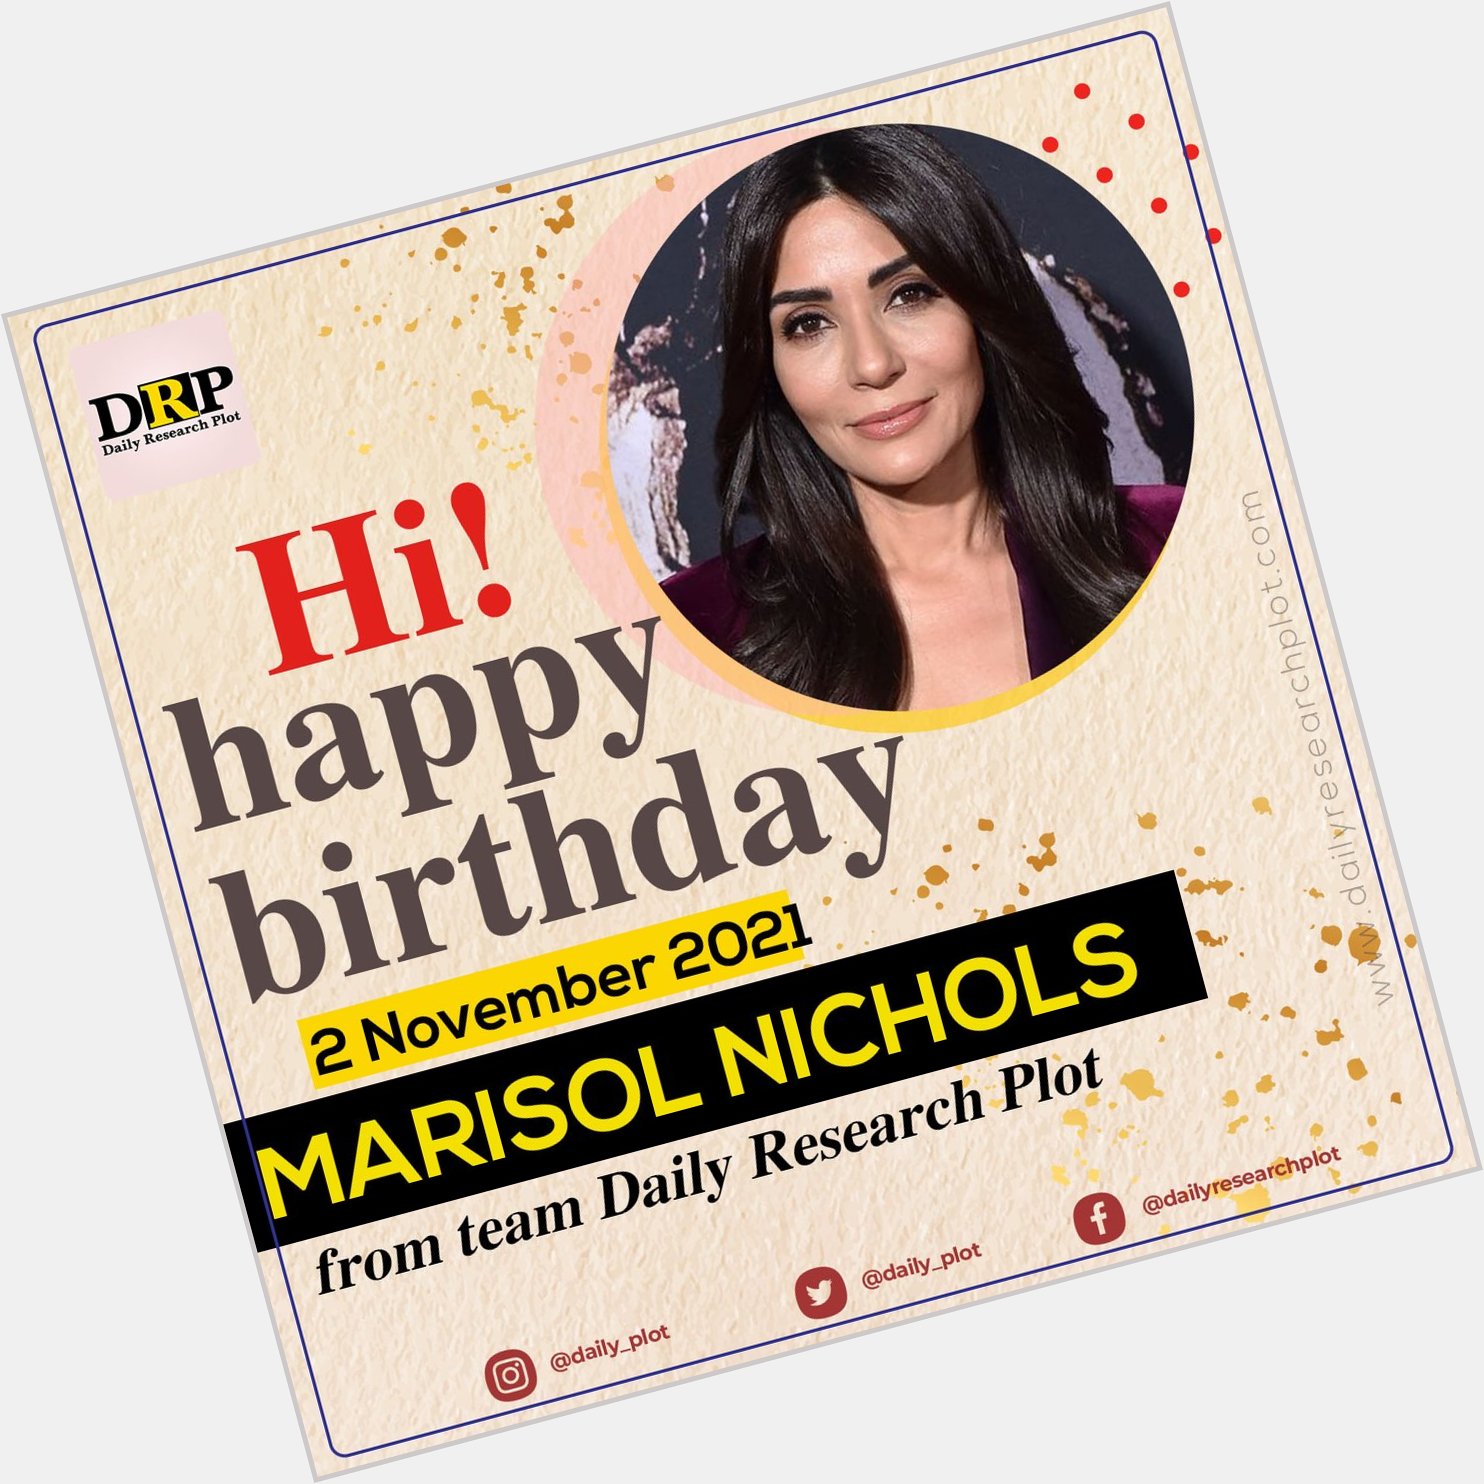 Happy Birthday!
Marisol Nichols 